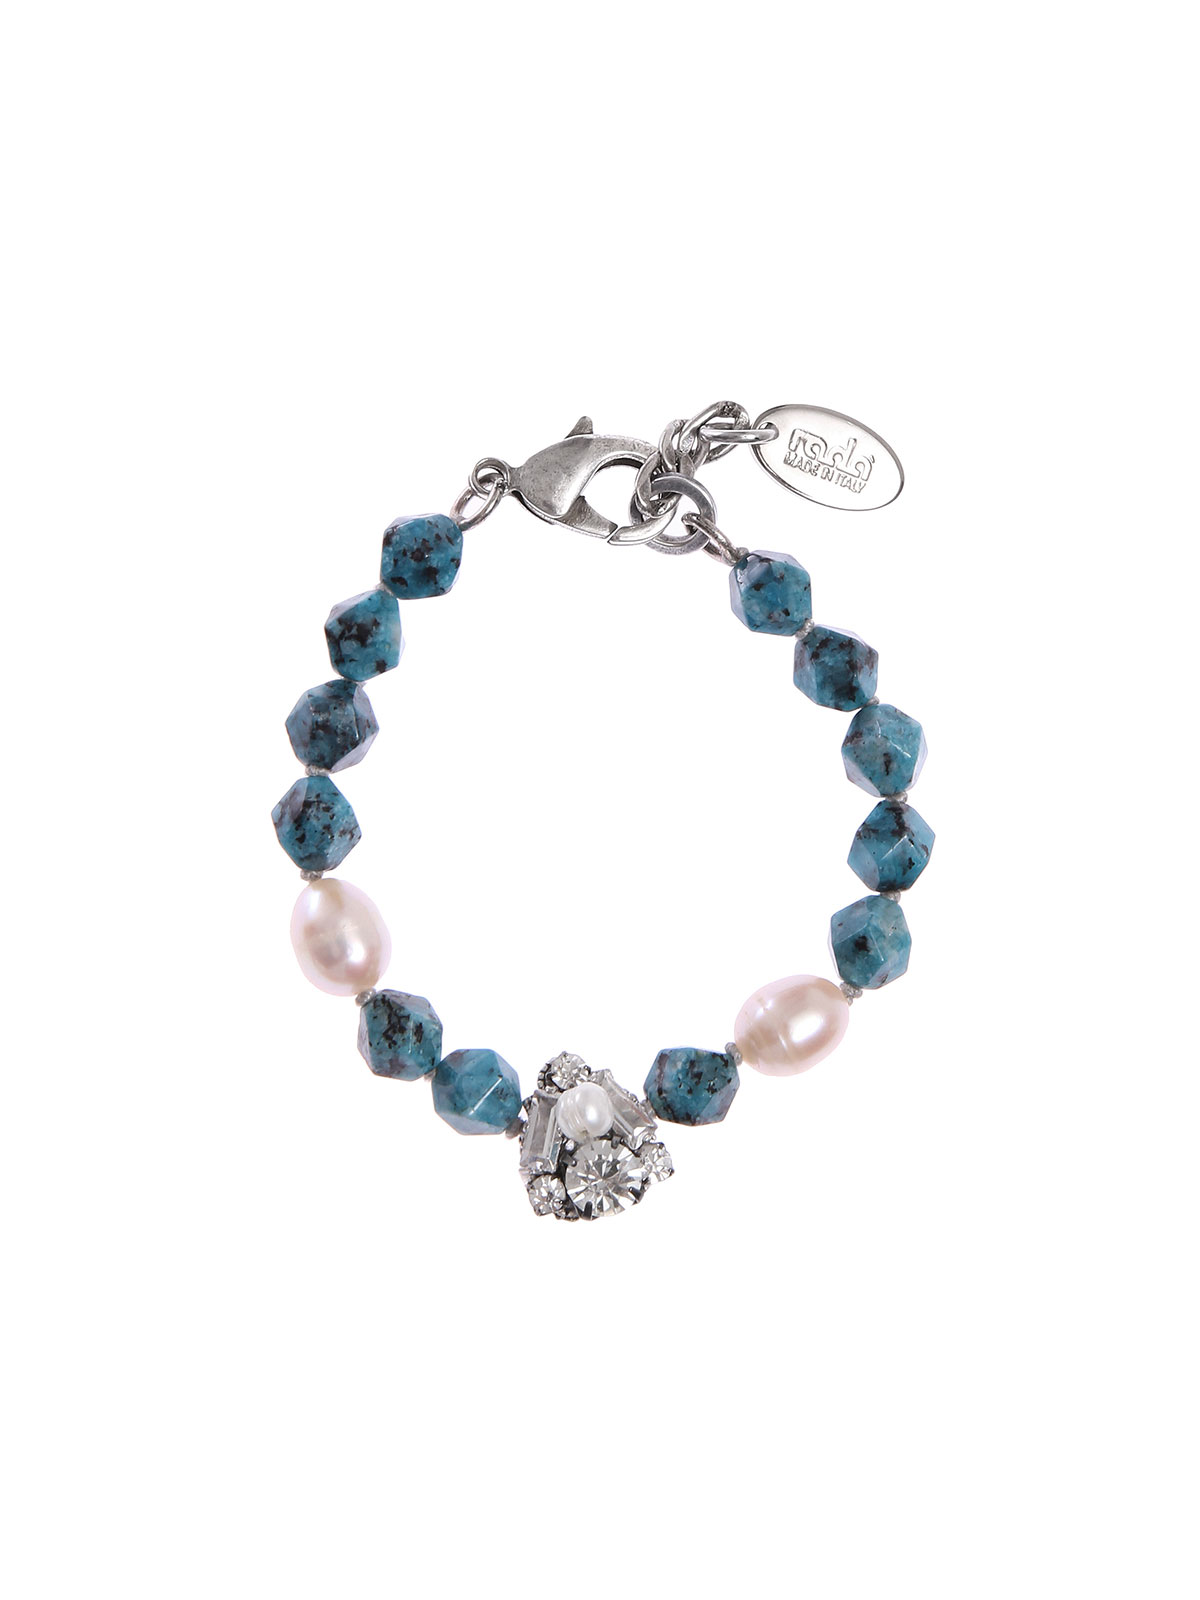 Colored labradorite stone bracelet